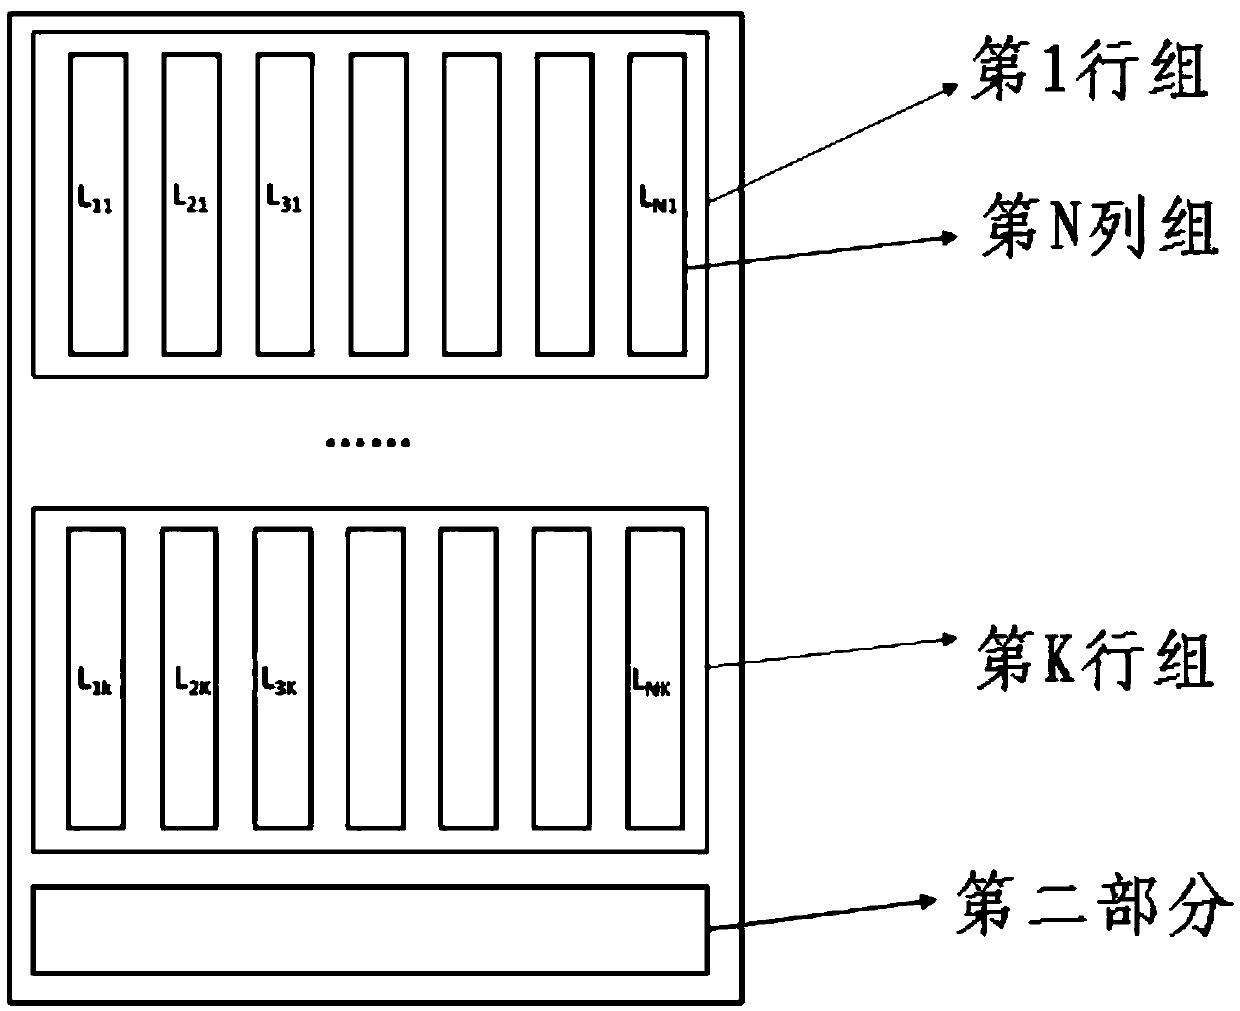 A time series data storage method based on multi-level columnar storage structure